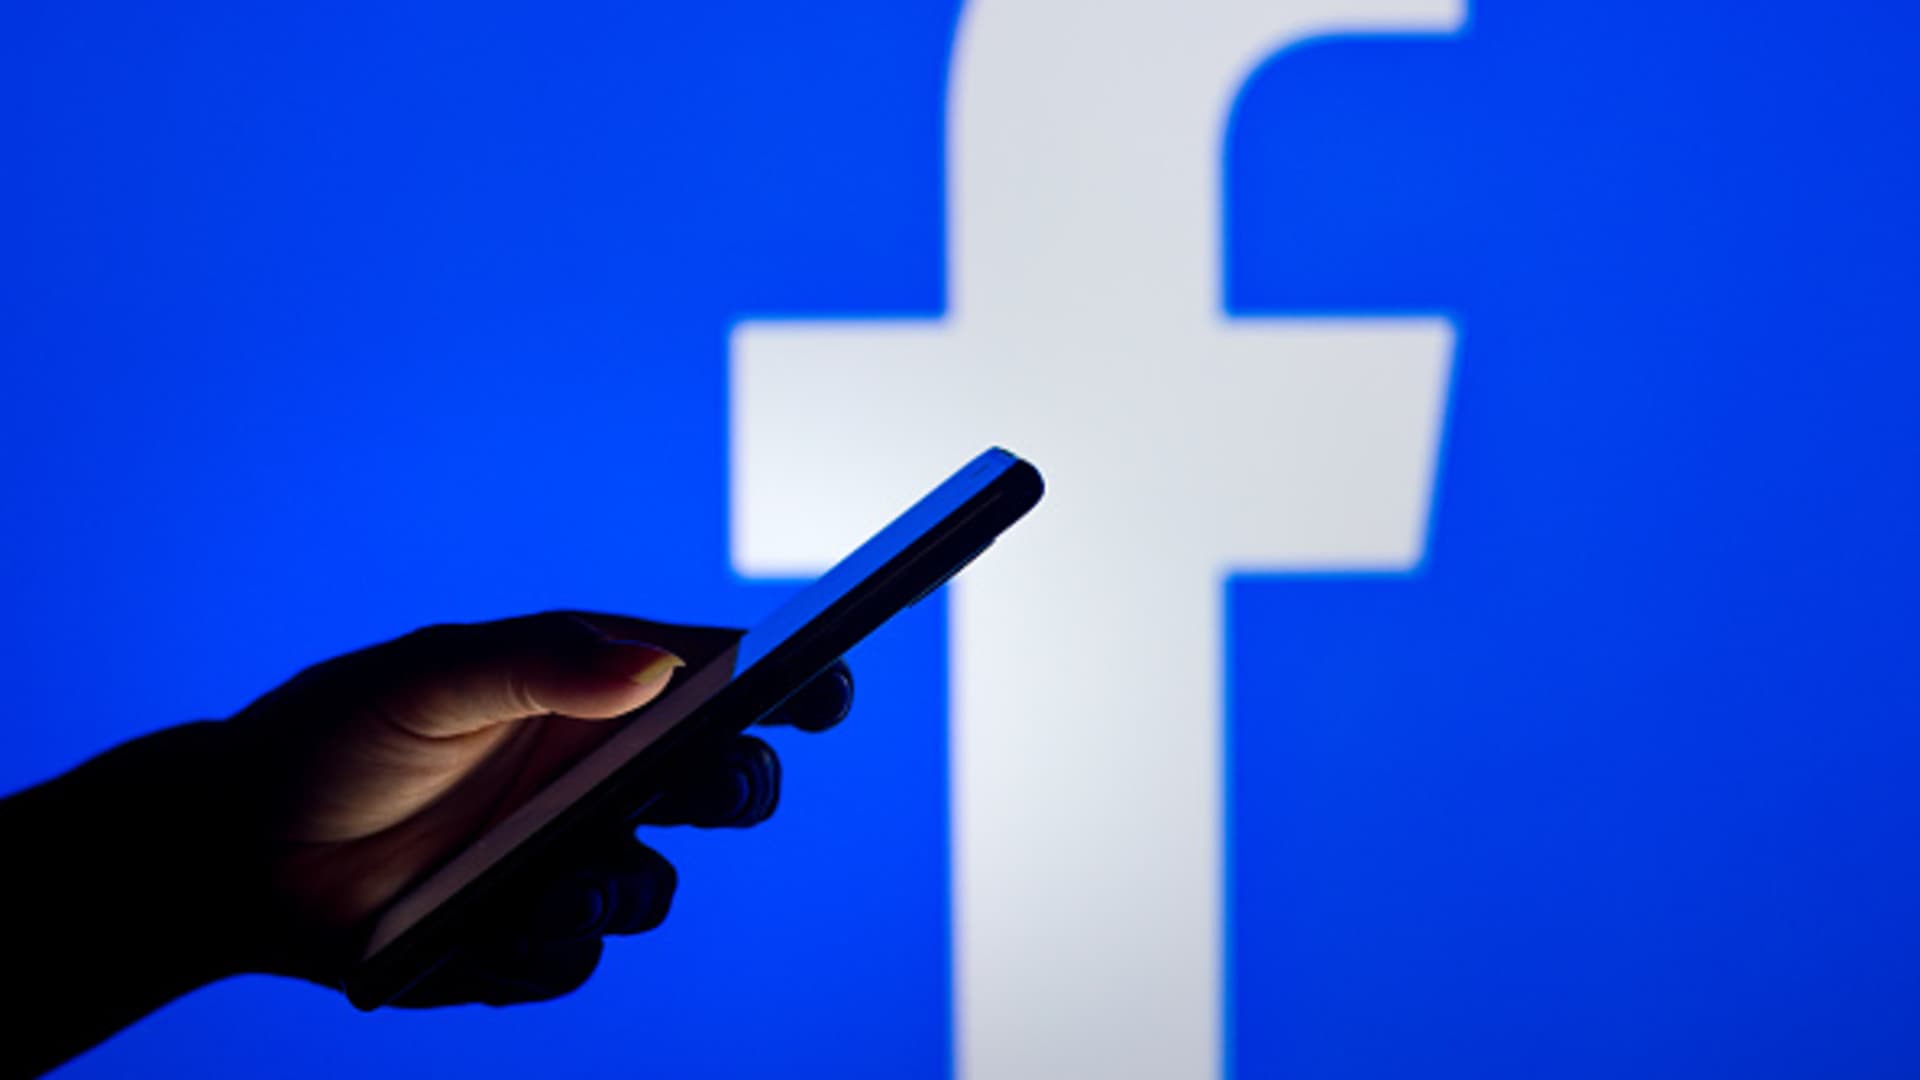 Facebook algorithm caused chaos ahead of Australia media law: WSJ